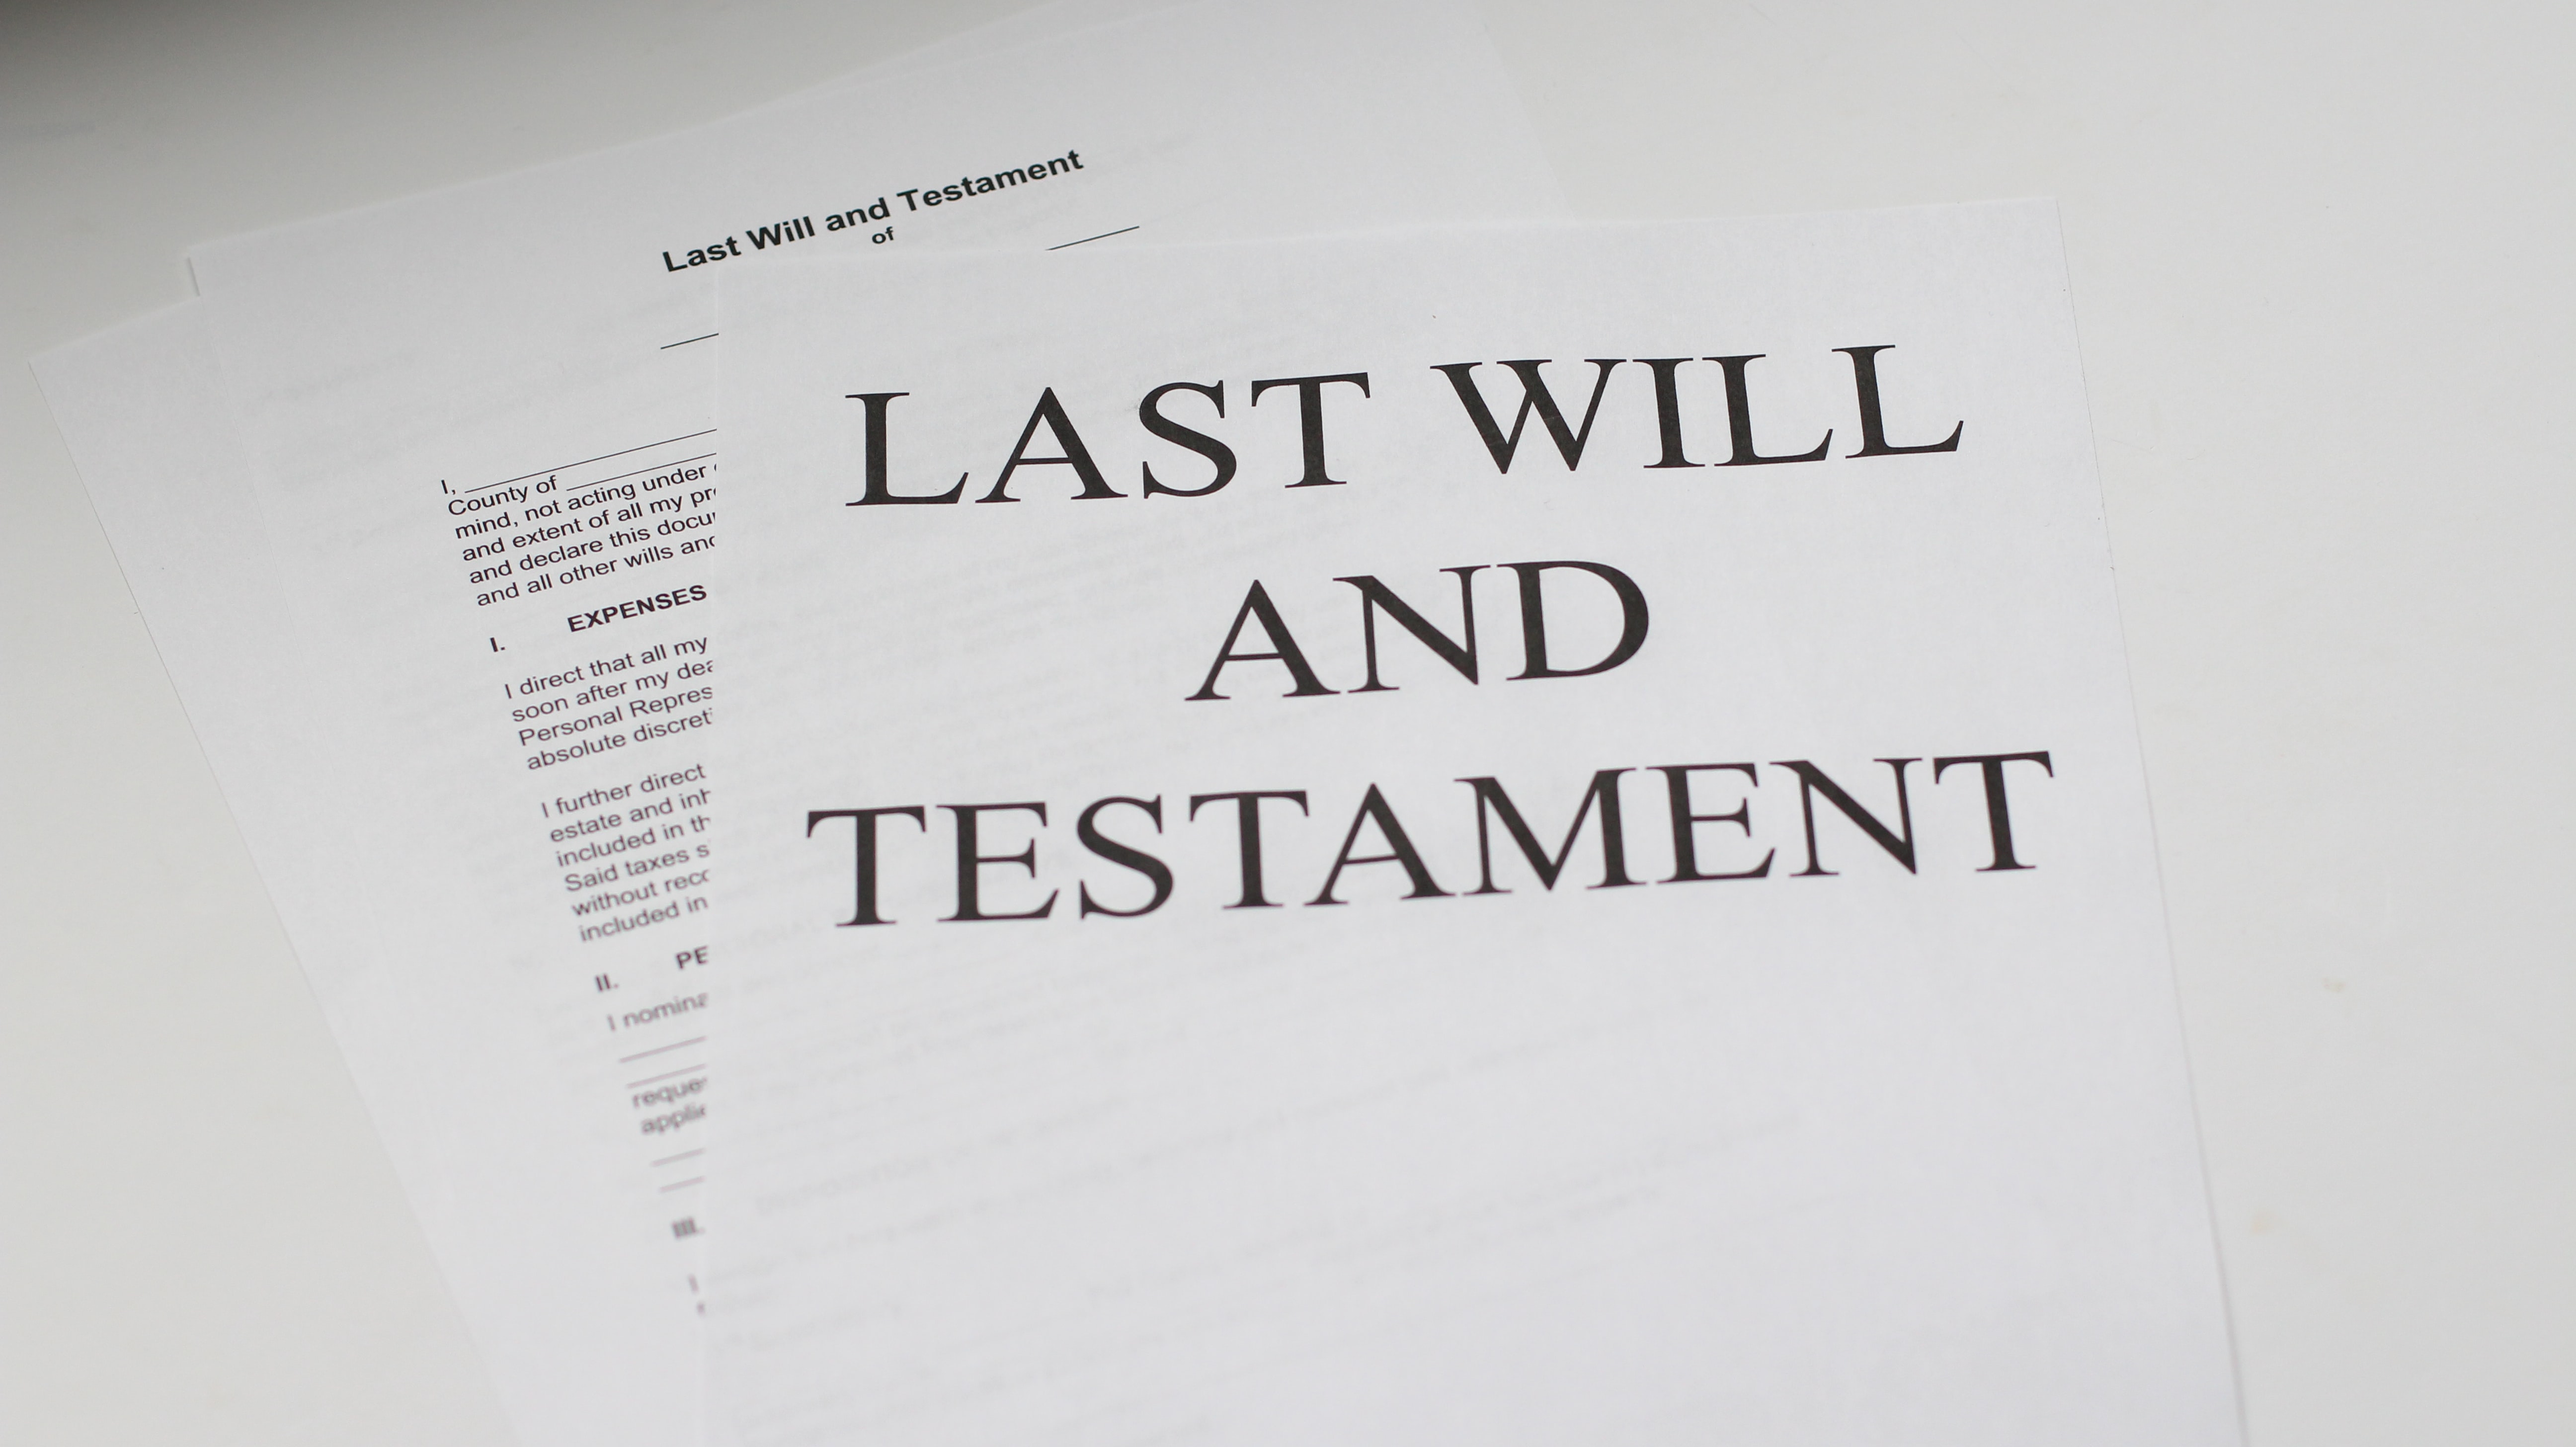 Paper saying "Last Will And Testament;" image by Melinda Gimpel, via Unsplash.com.